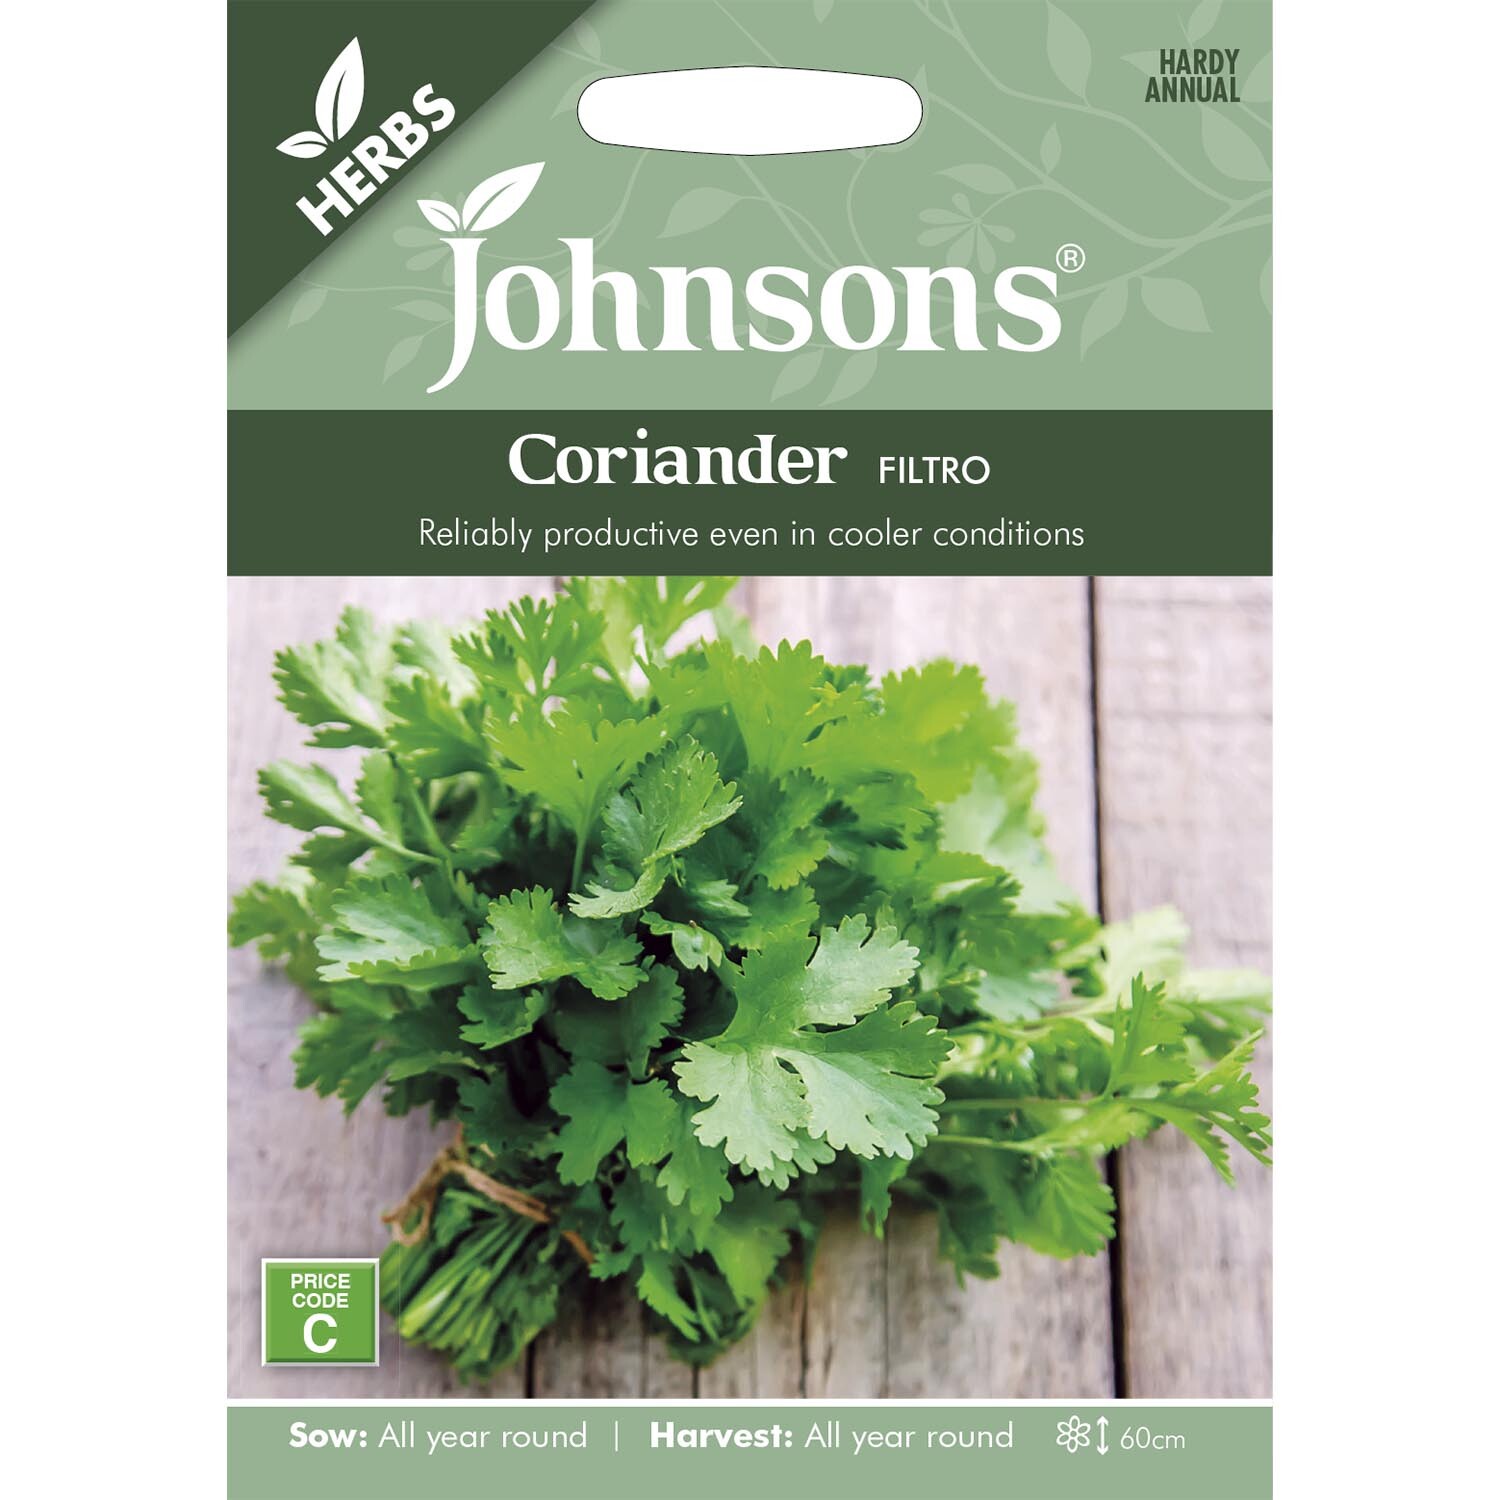 Johnsons Coriander Filtro Herb Seeds Image 2